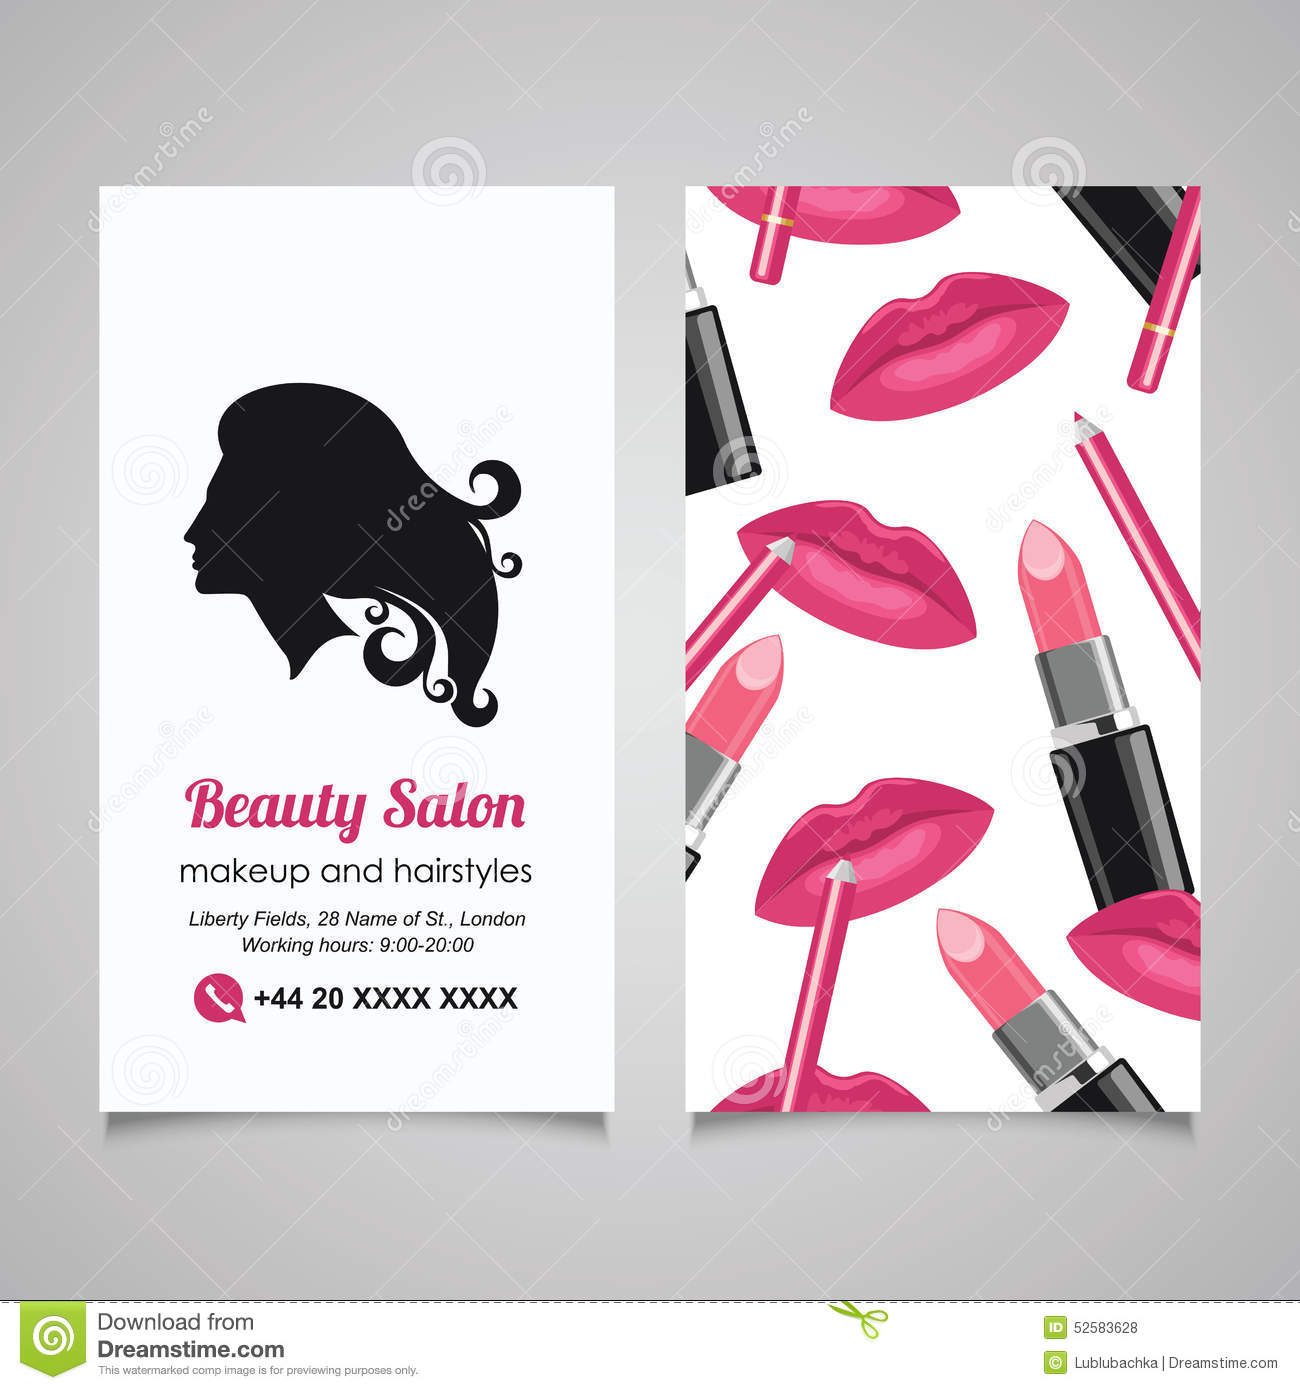 Beauty Salon Business Card Design Template With Beautiful Intended For Hair Salon Business Card Template